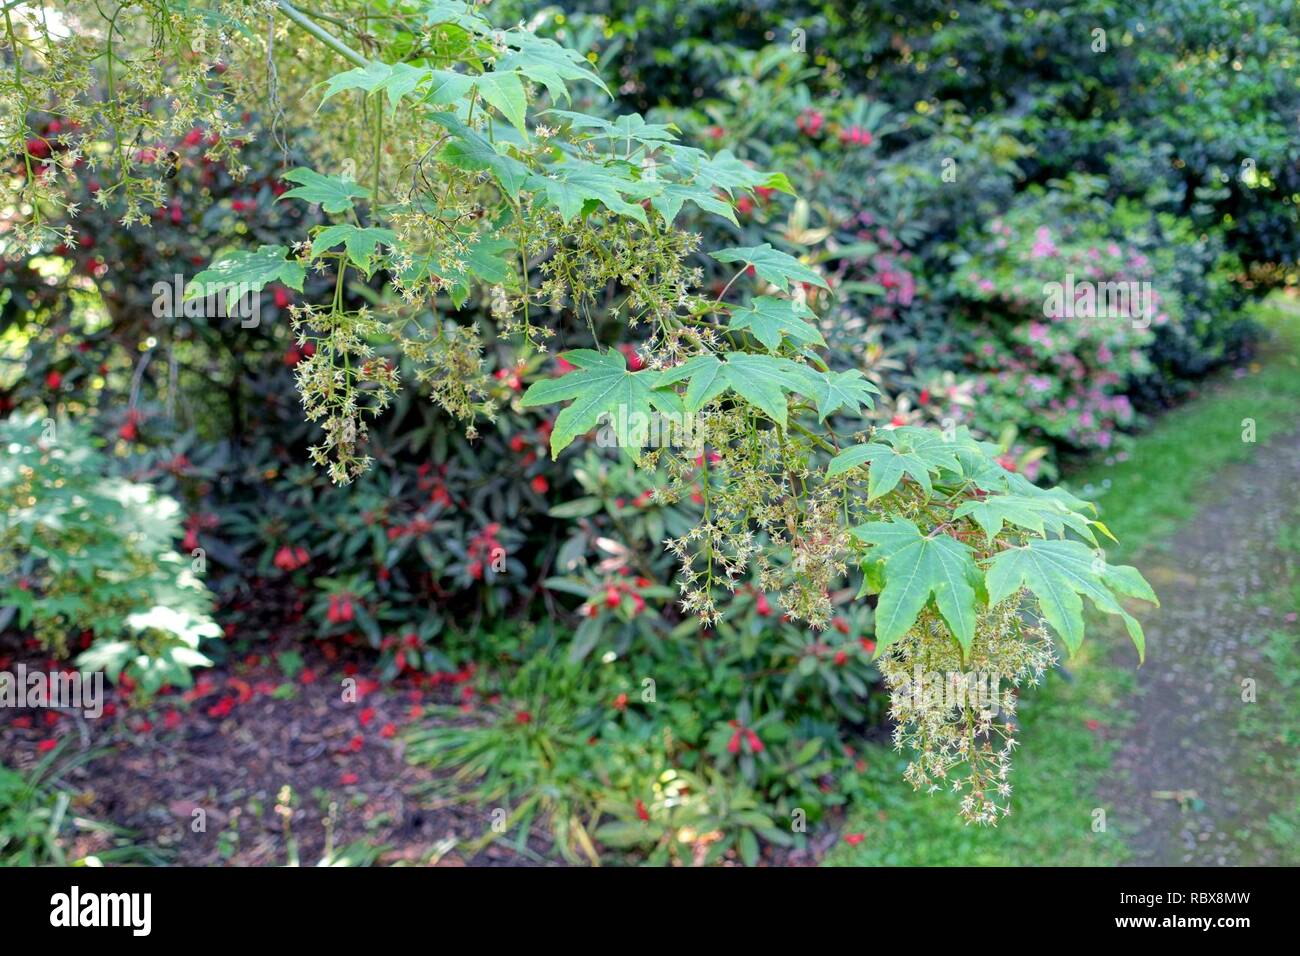 Acer campbellii subsp. flabellatum - Savill Garden - Windsor Great Park, England - DSC06248. Stock Photo